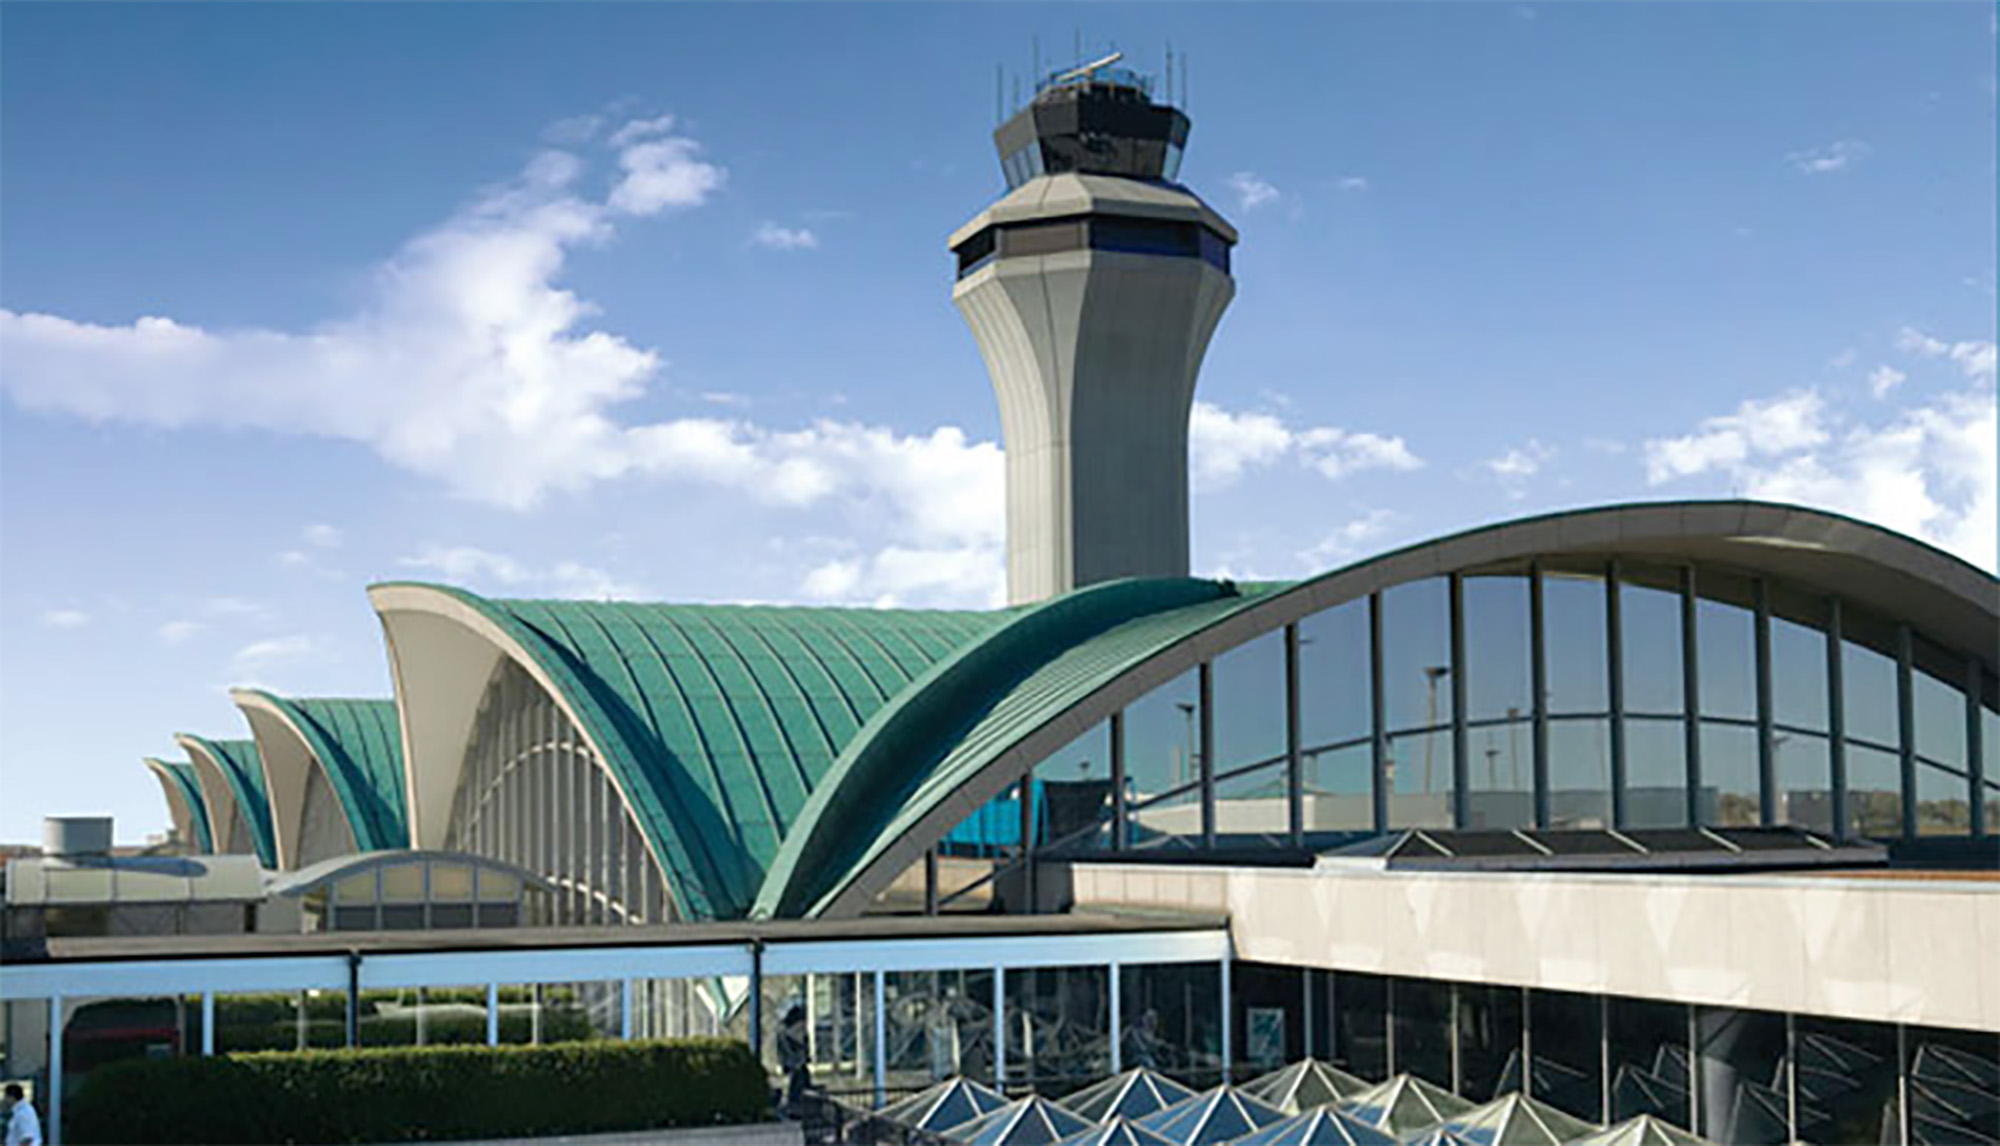 St. Louis Lambert International Airport Guide